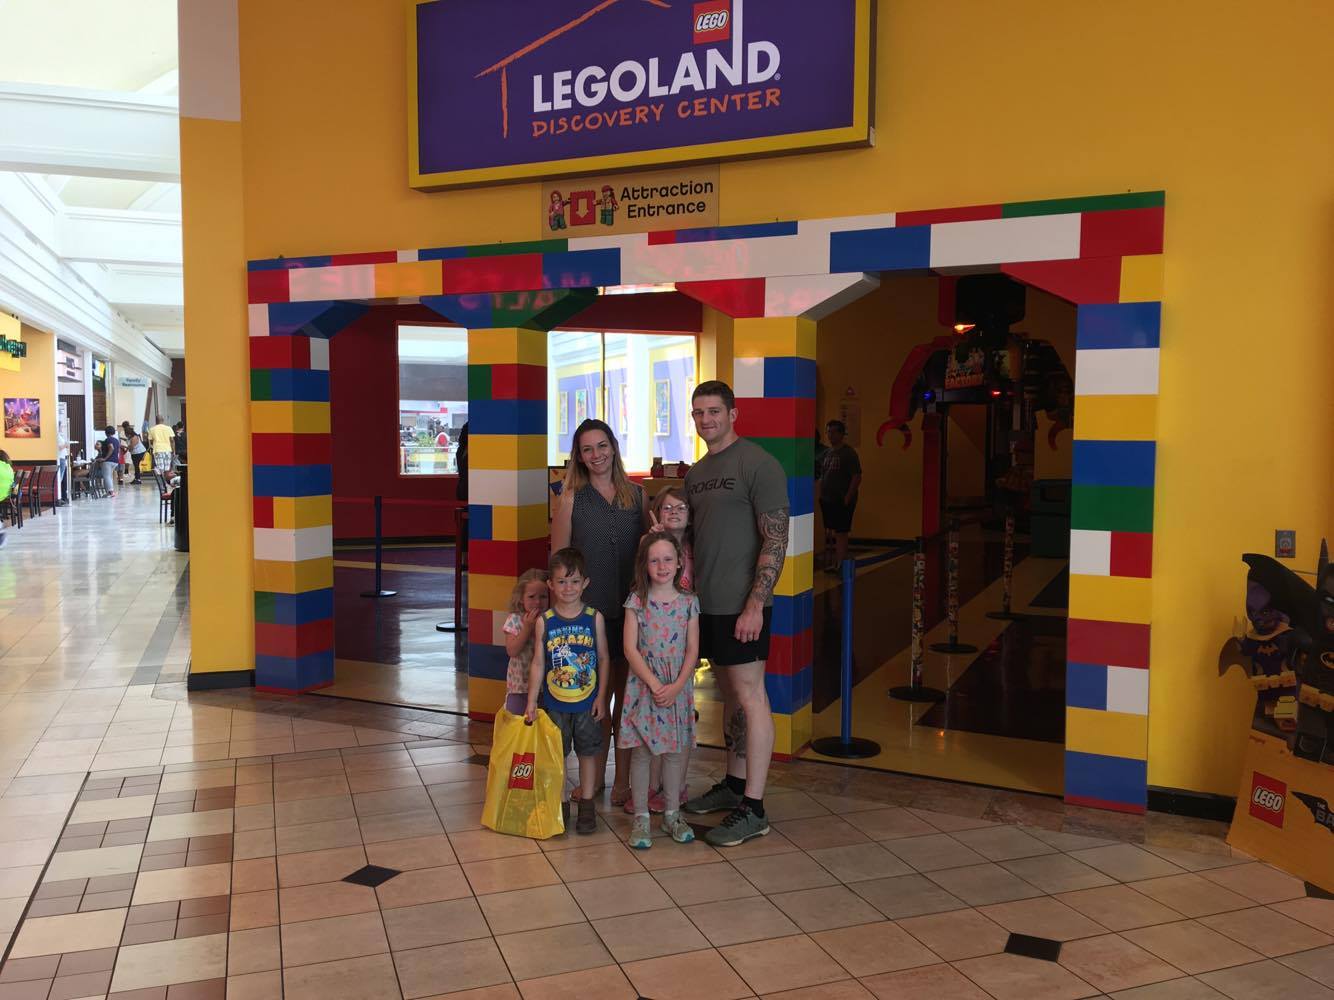 Legoland Discovery Center Atlanta: Summer Fun For Your Military family ...